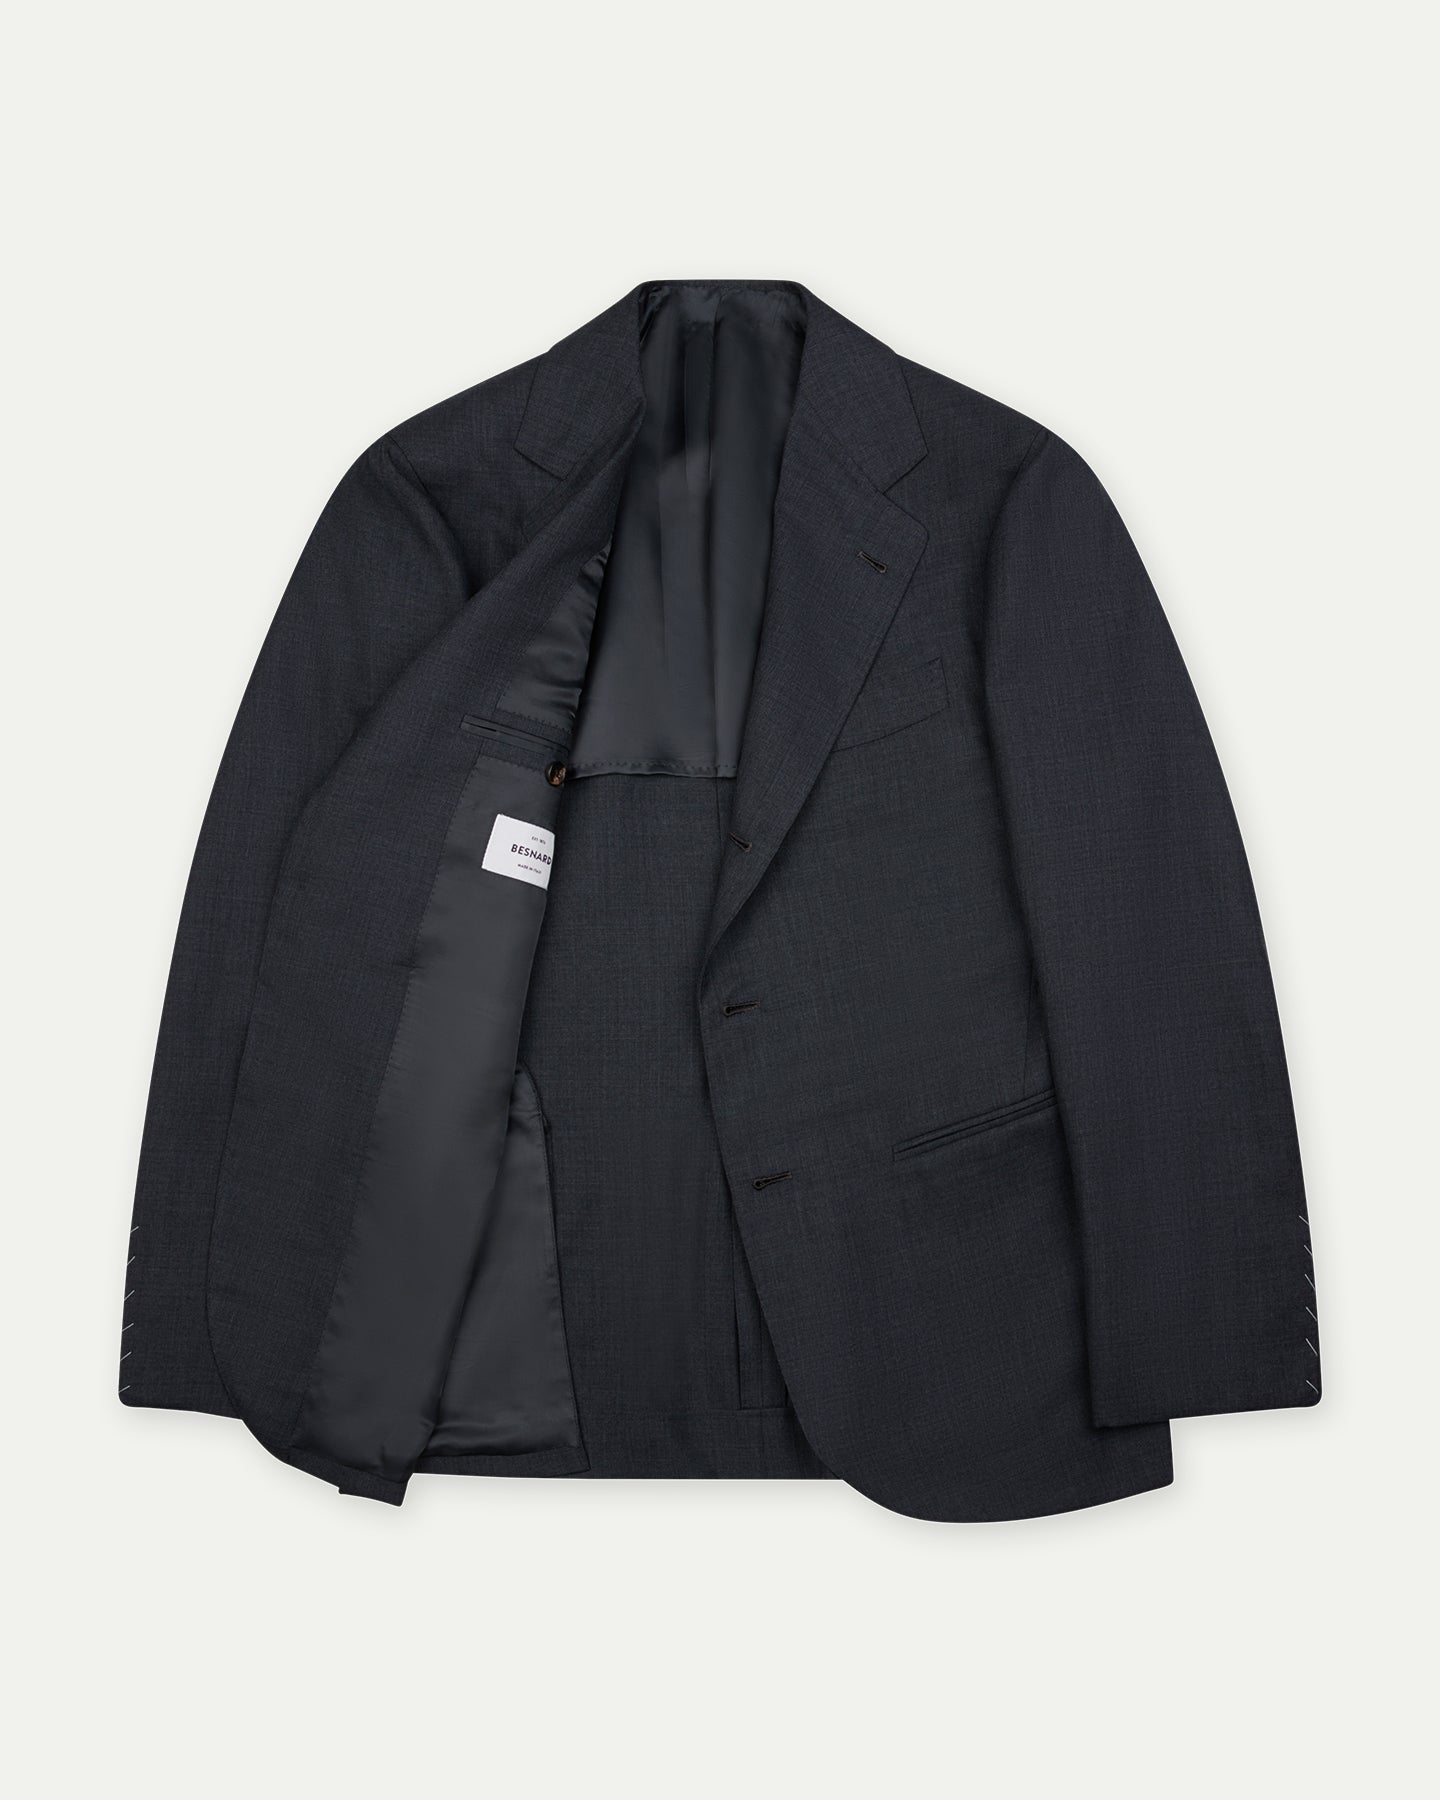 Made-To-Order Mid Grey Sharkskin Suit Jacket | Besnard